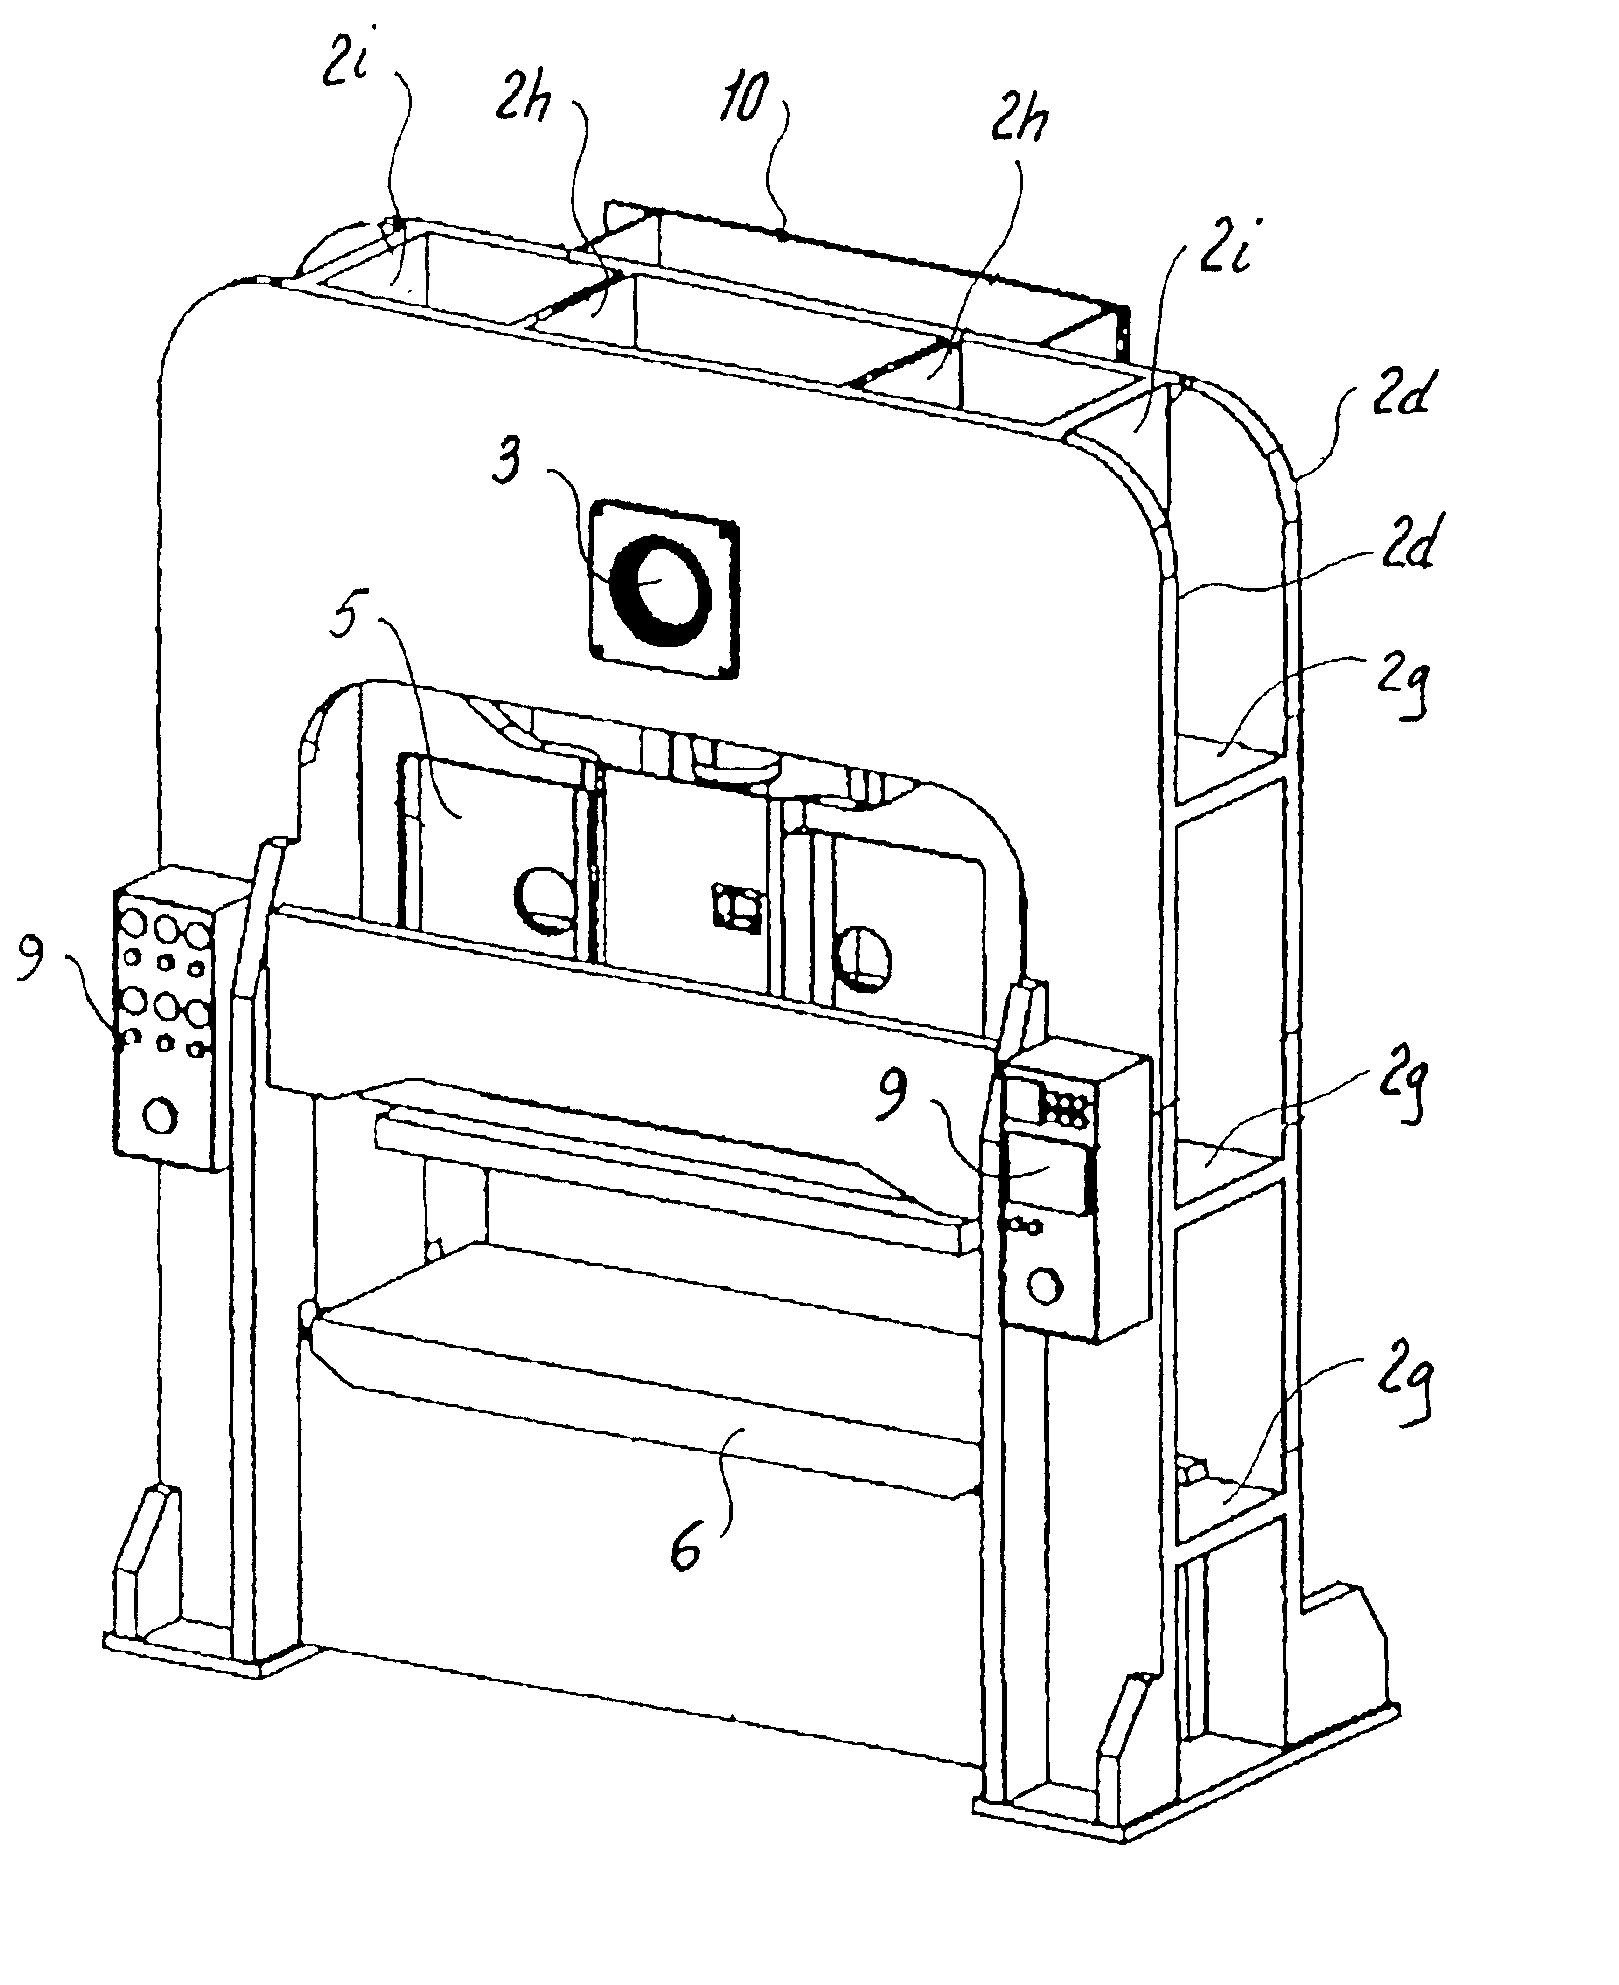 Machine press